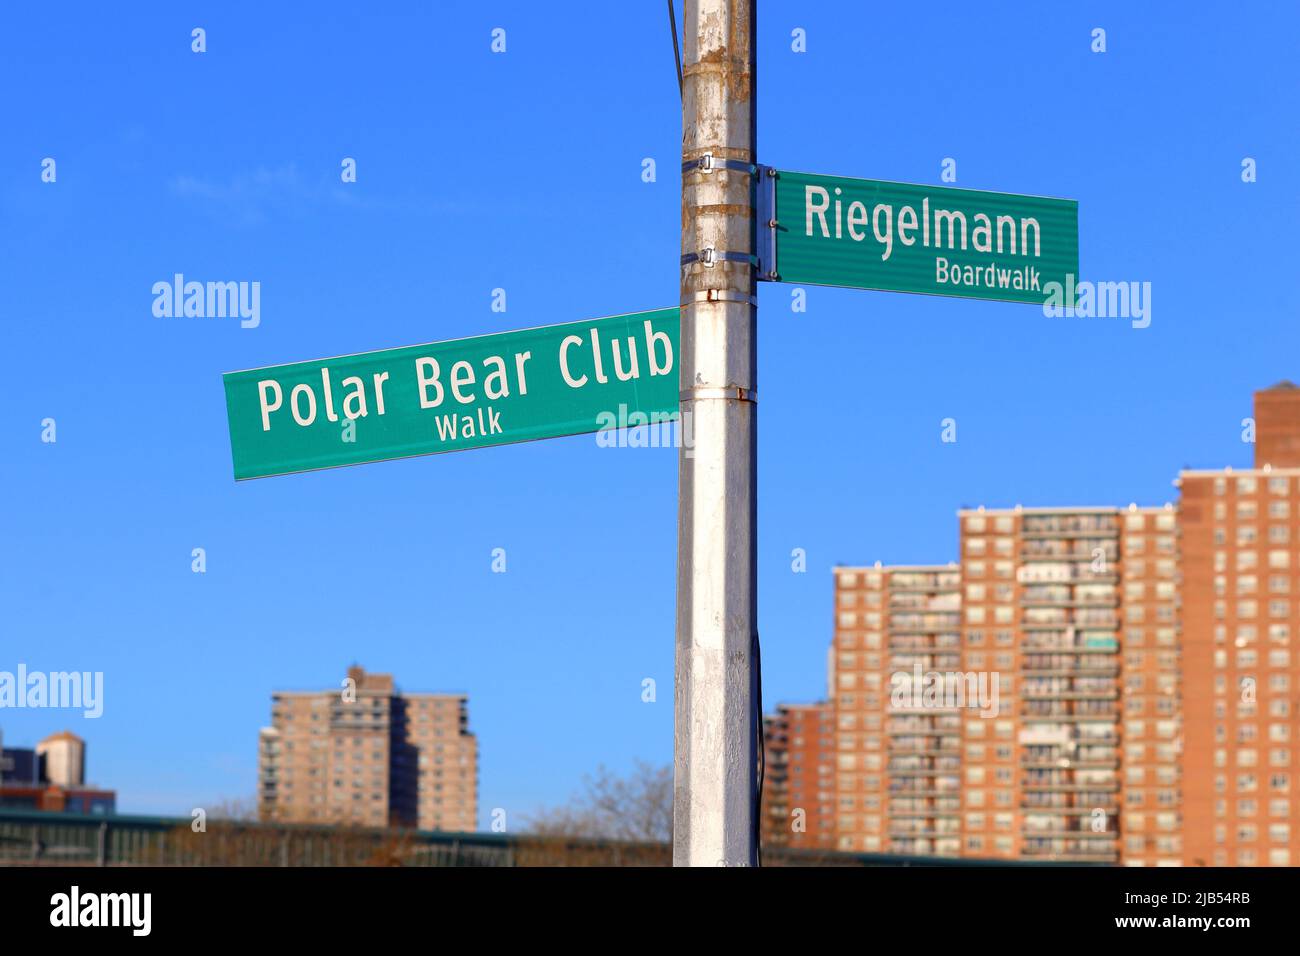 Segnaletica per il Polar Bear Club Walk e il Riegelmann Boardwalk sulla Coney Island Boardwalk, Brooklyn, New York Foto Stock